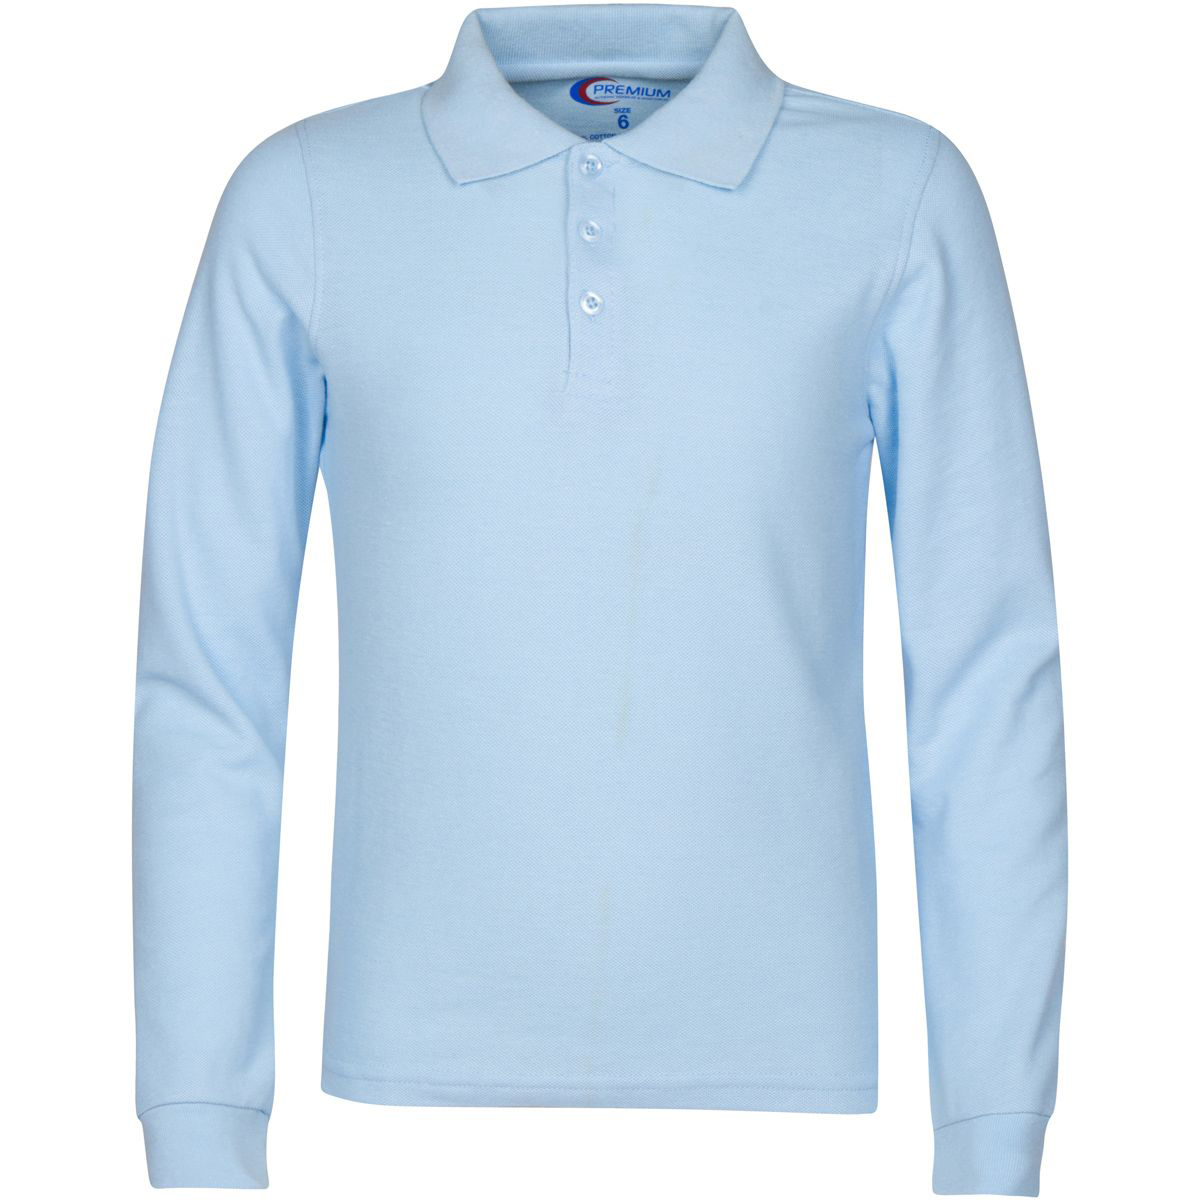 Boy's School UNIFORM Long-Sleeve Shirts - Light Blue - Choose Your Sizes (3/4-18/20)